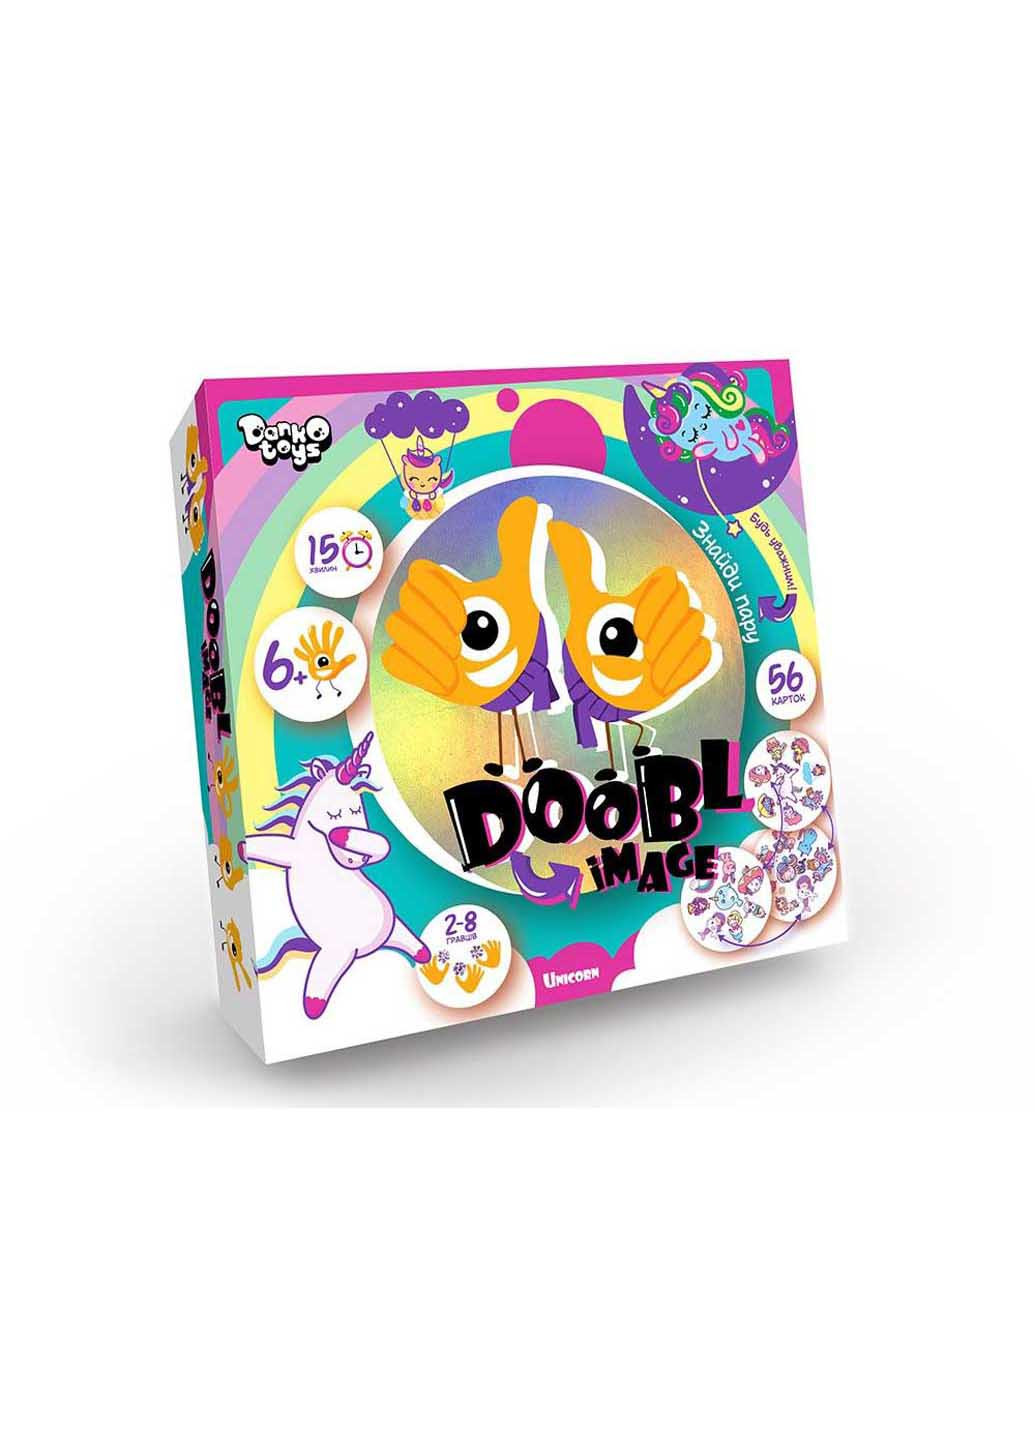 Настольная игра Doobl image Unicorn Danko Toys (260268508)